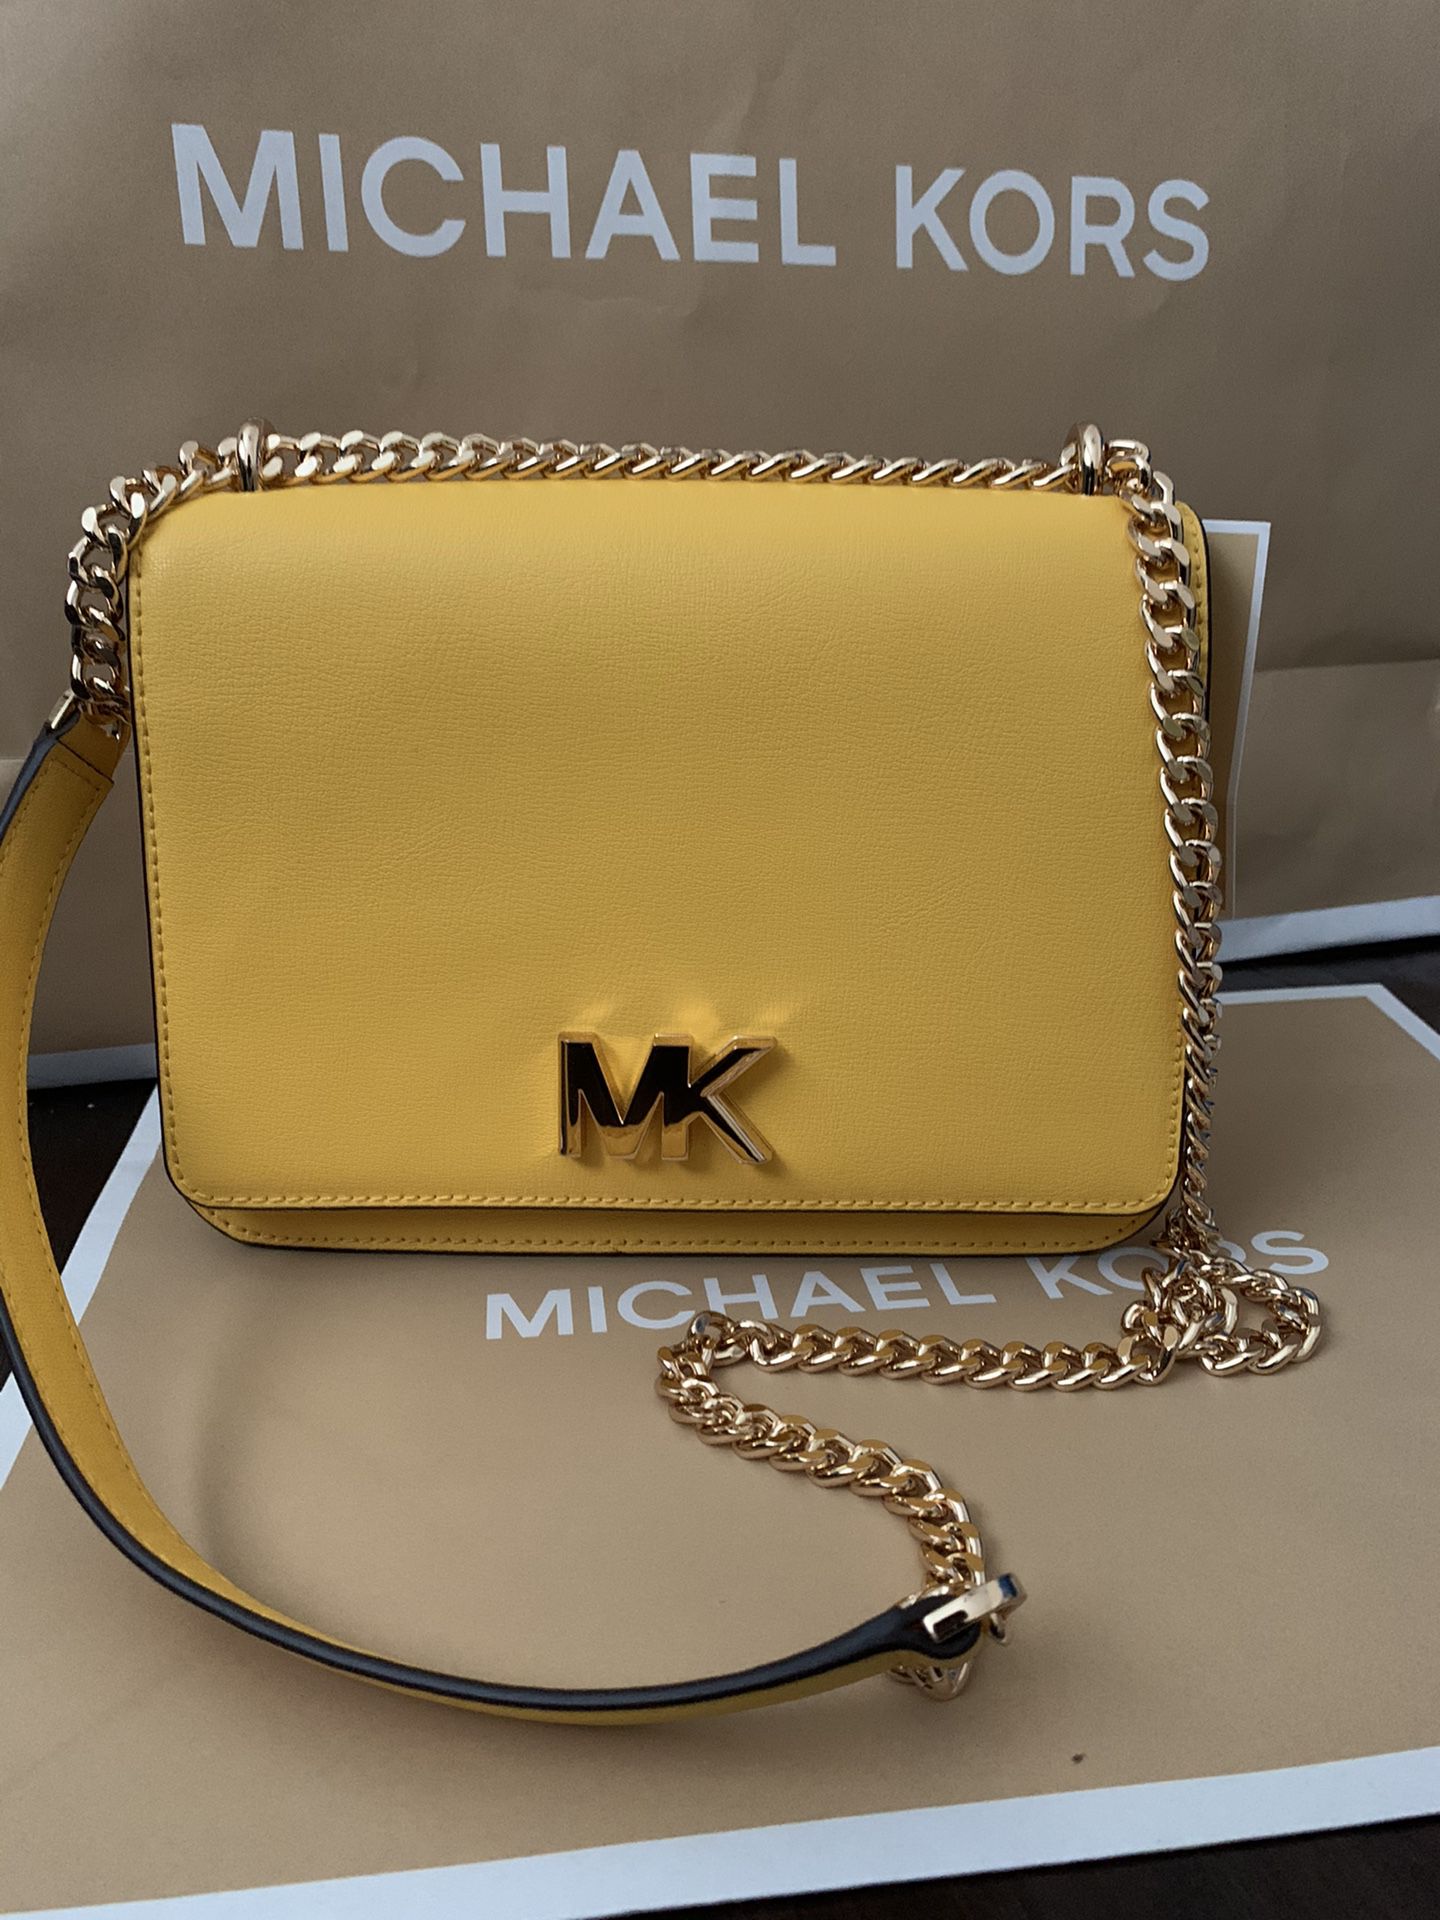 Brand new!!!💯 Real!!! Michael kors Mott ***large*** chain satchel Mustard color